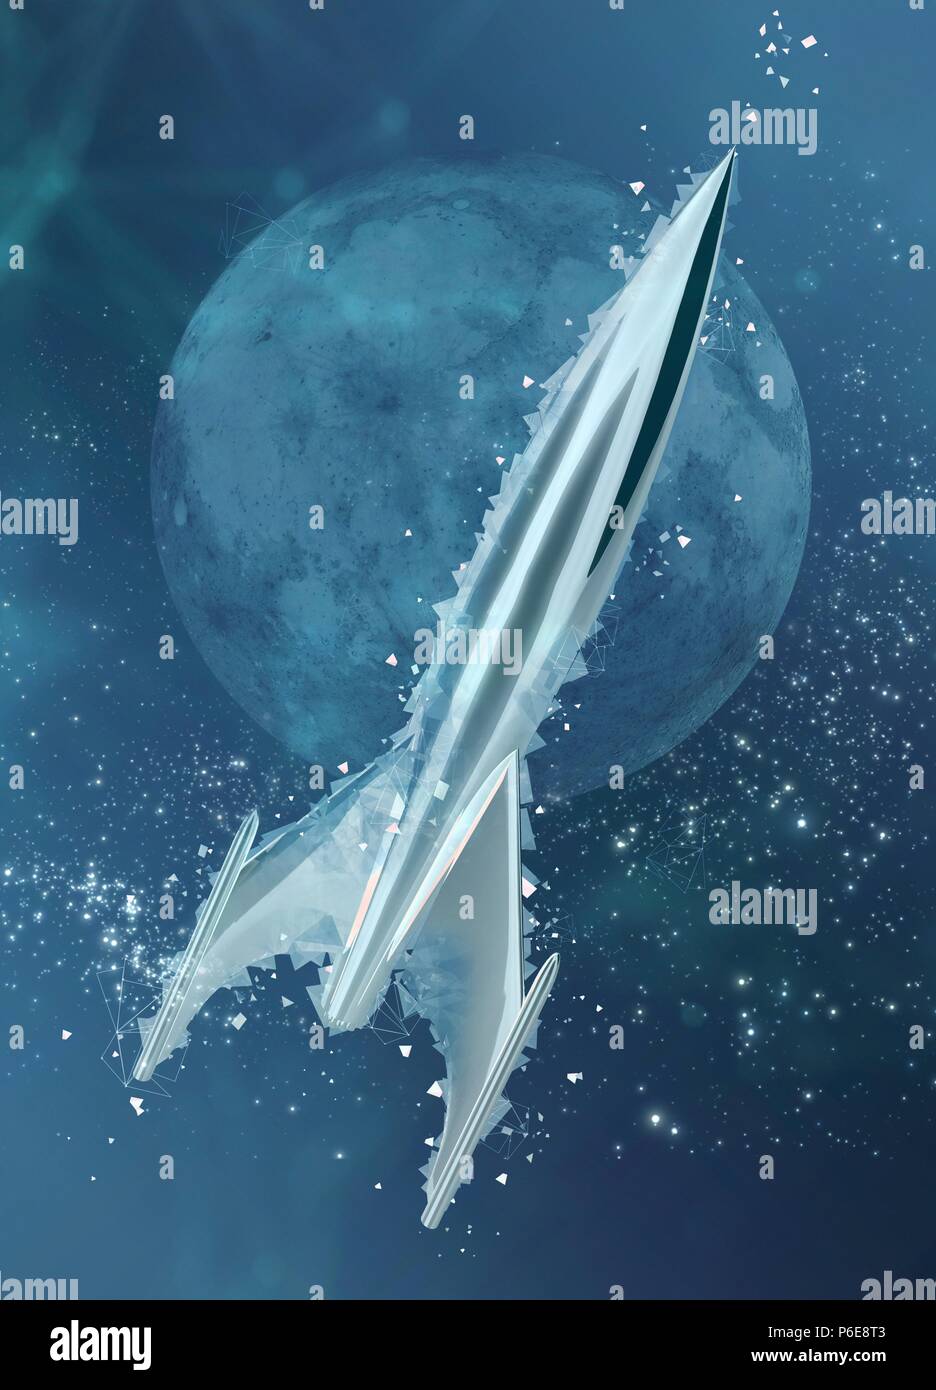 Retro space rocket and moon, illustration. Stock Photo